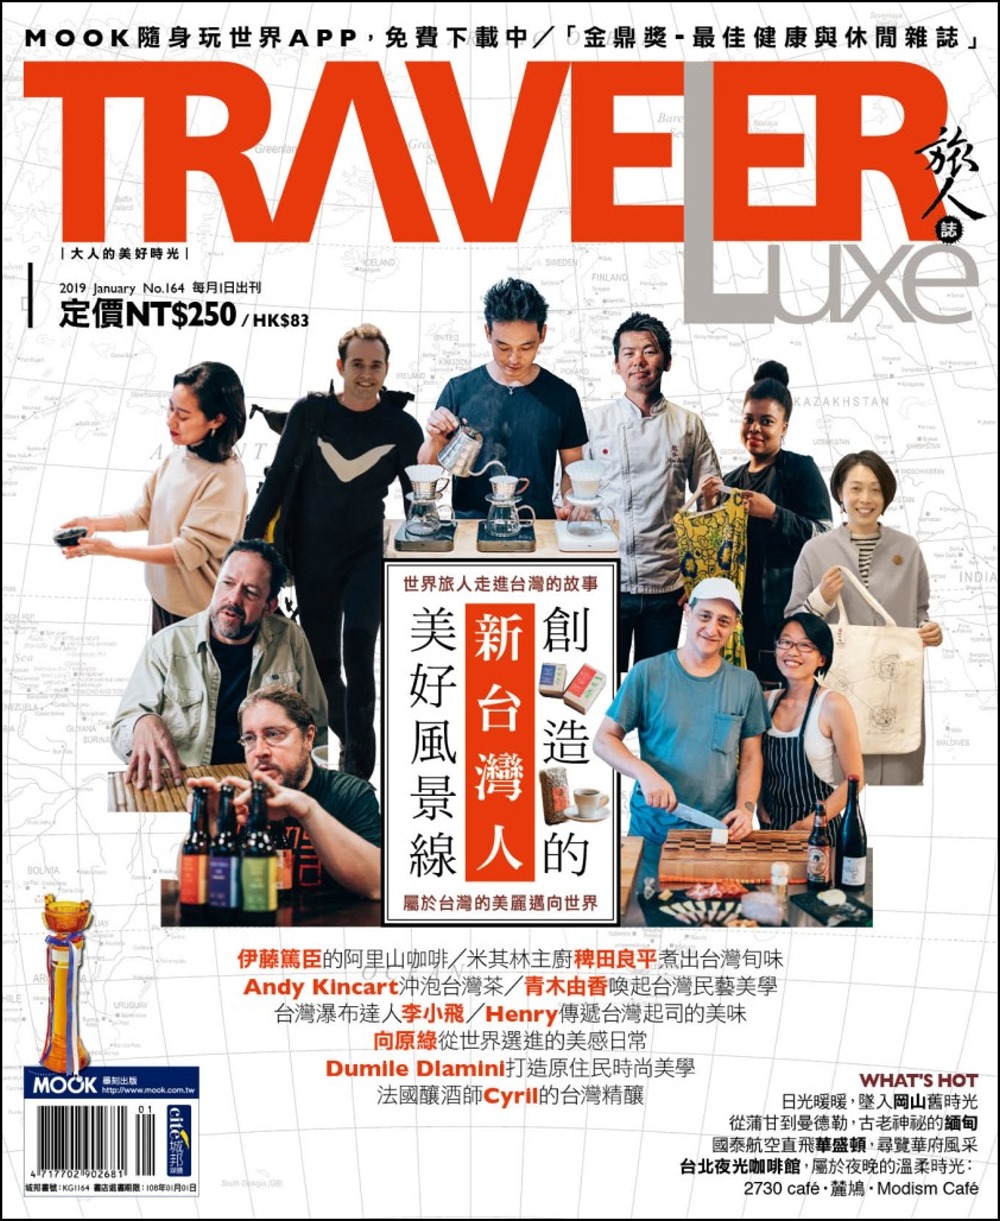 TRAVELER LUXE 旅人誌 1月號/2019 第164期+《典藏葡萄酒世界地圖》